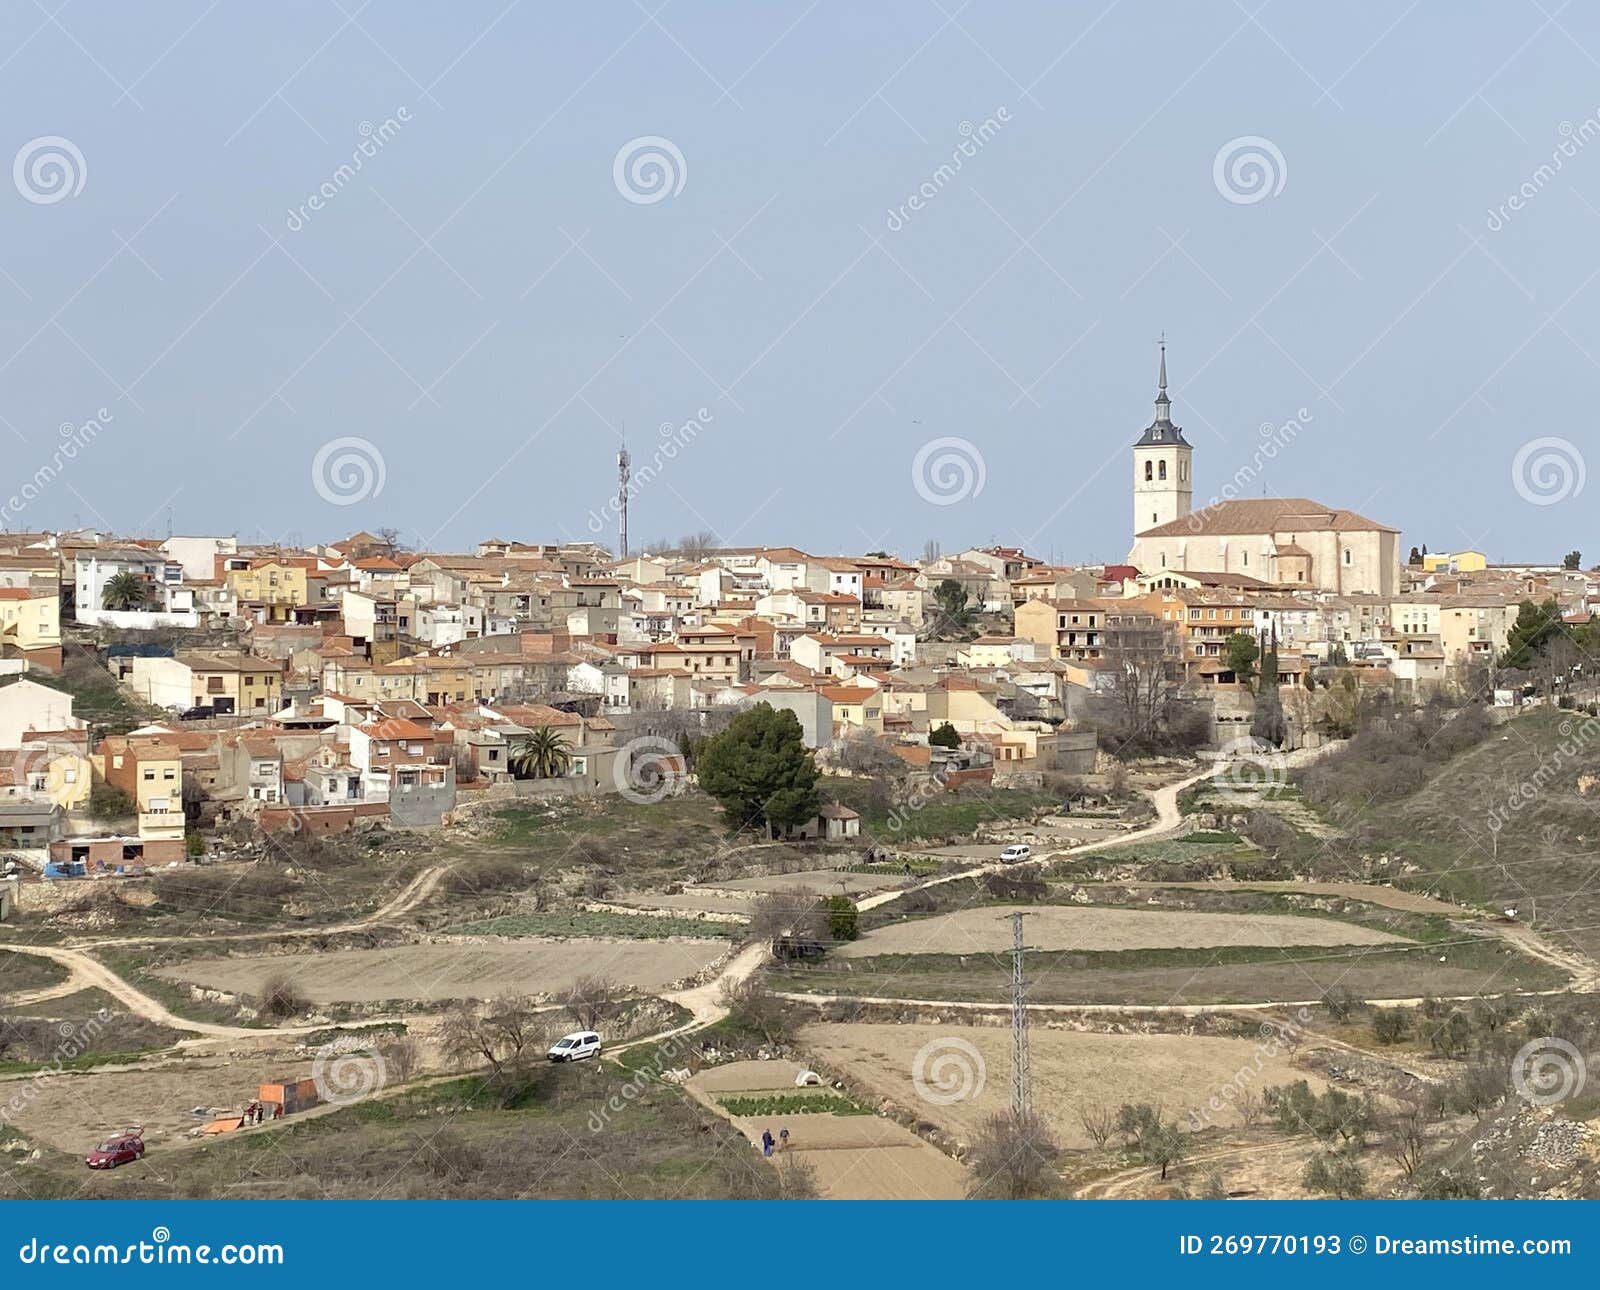 colmenar de oreja, town of madrid in spain